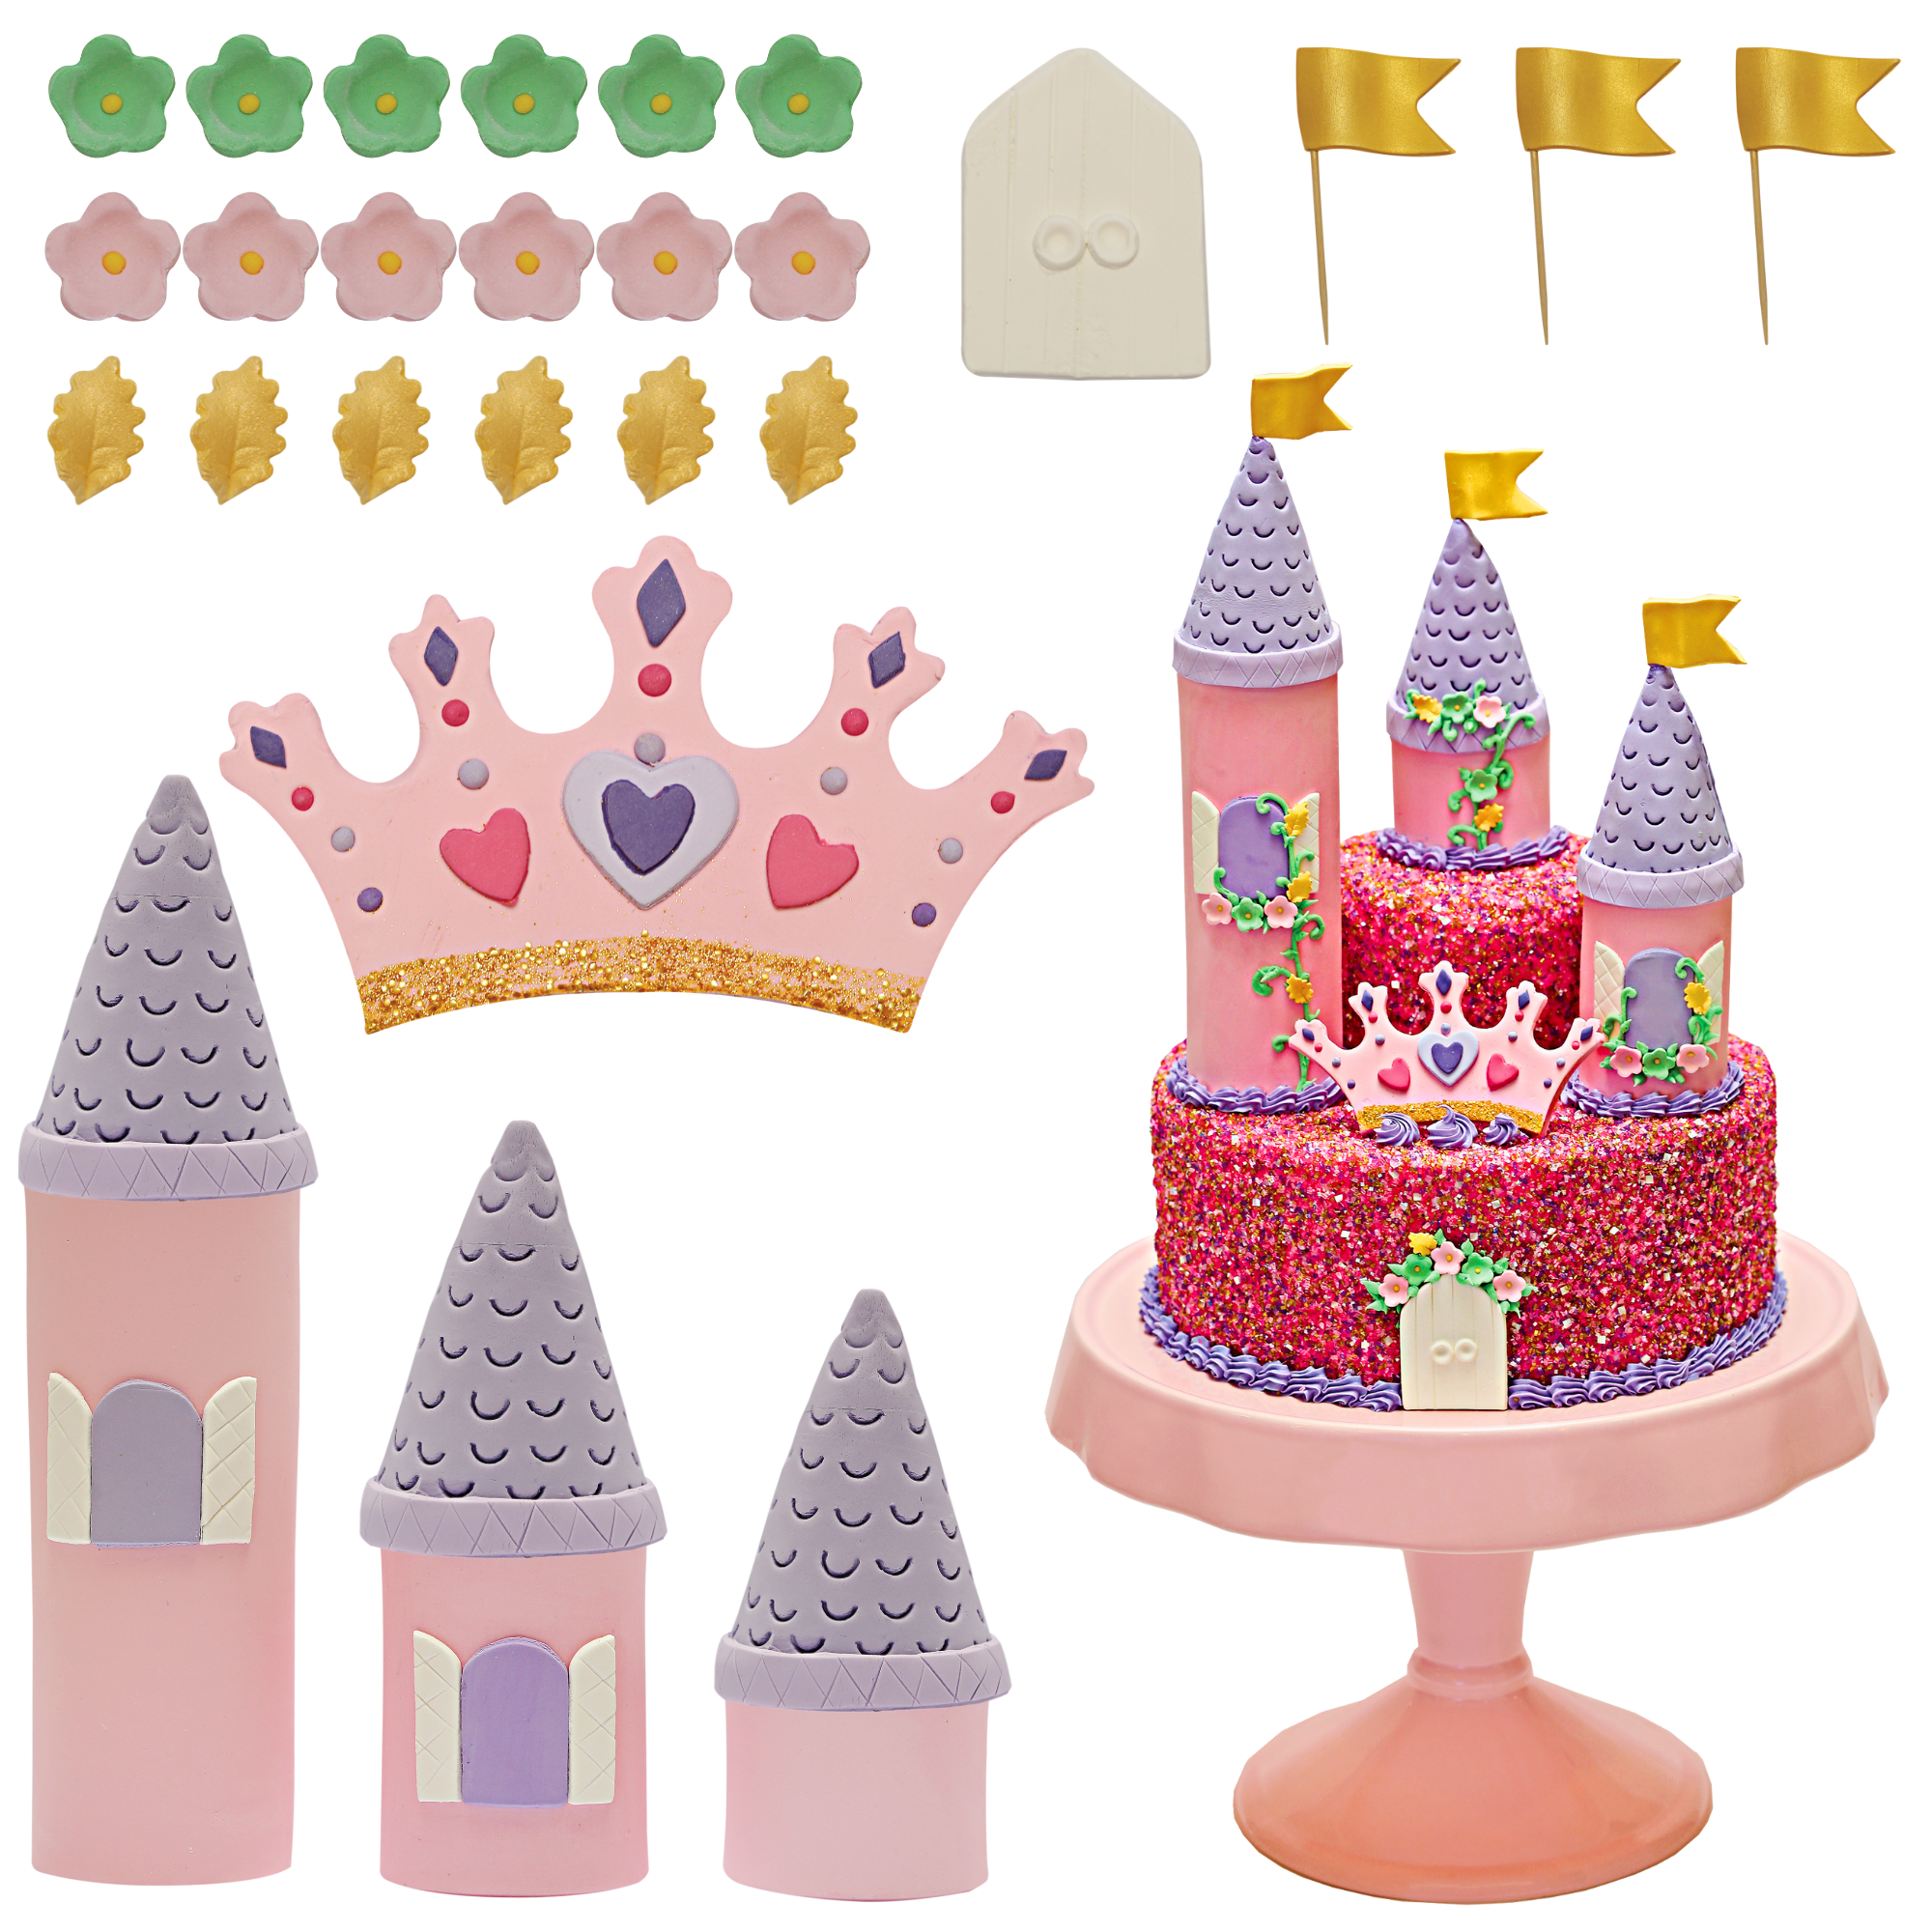 Princess Castle Designer Cake Decor